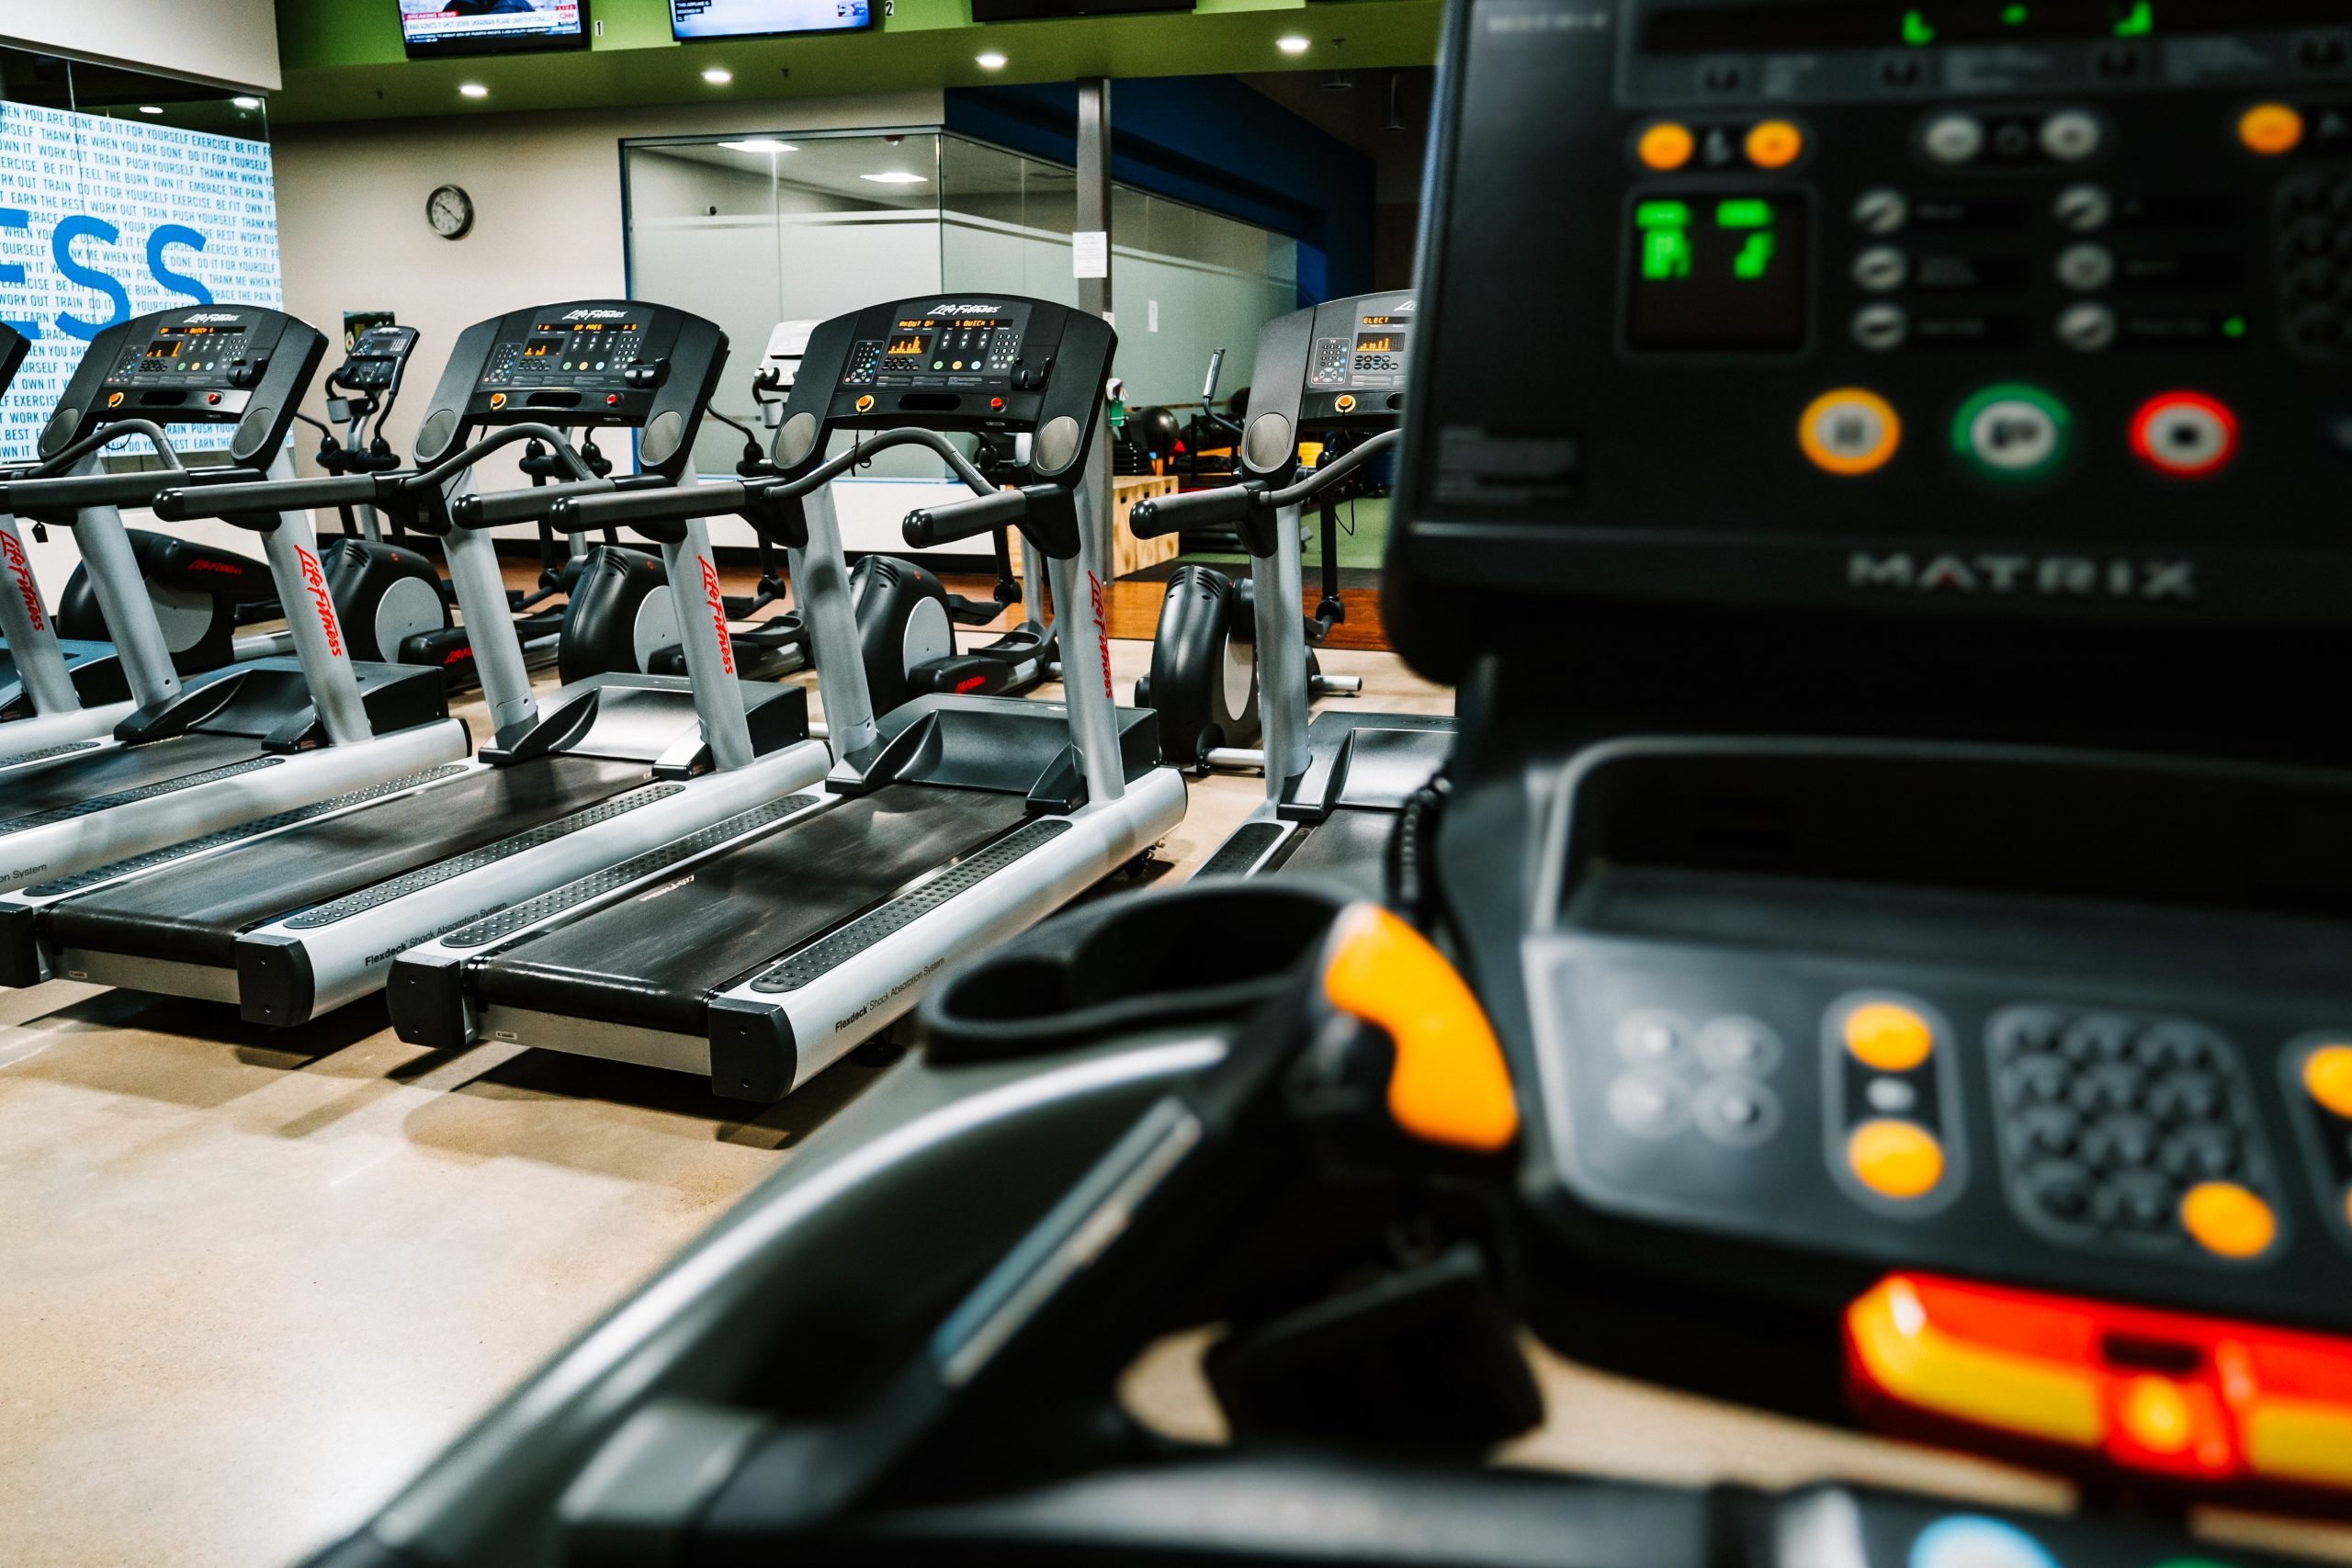 Treadmills and gym equipment